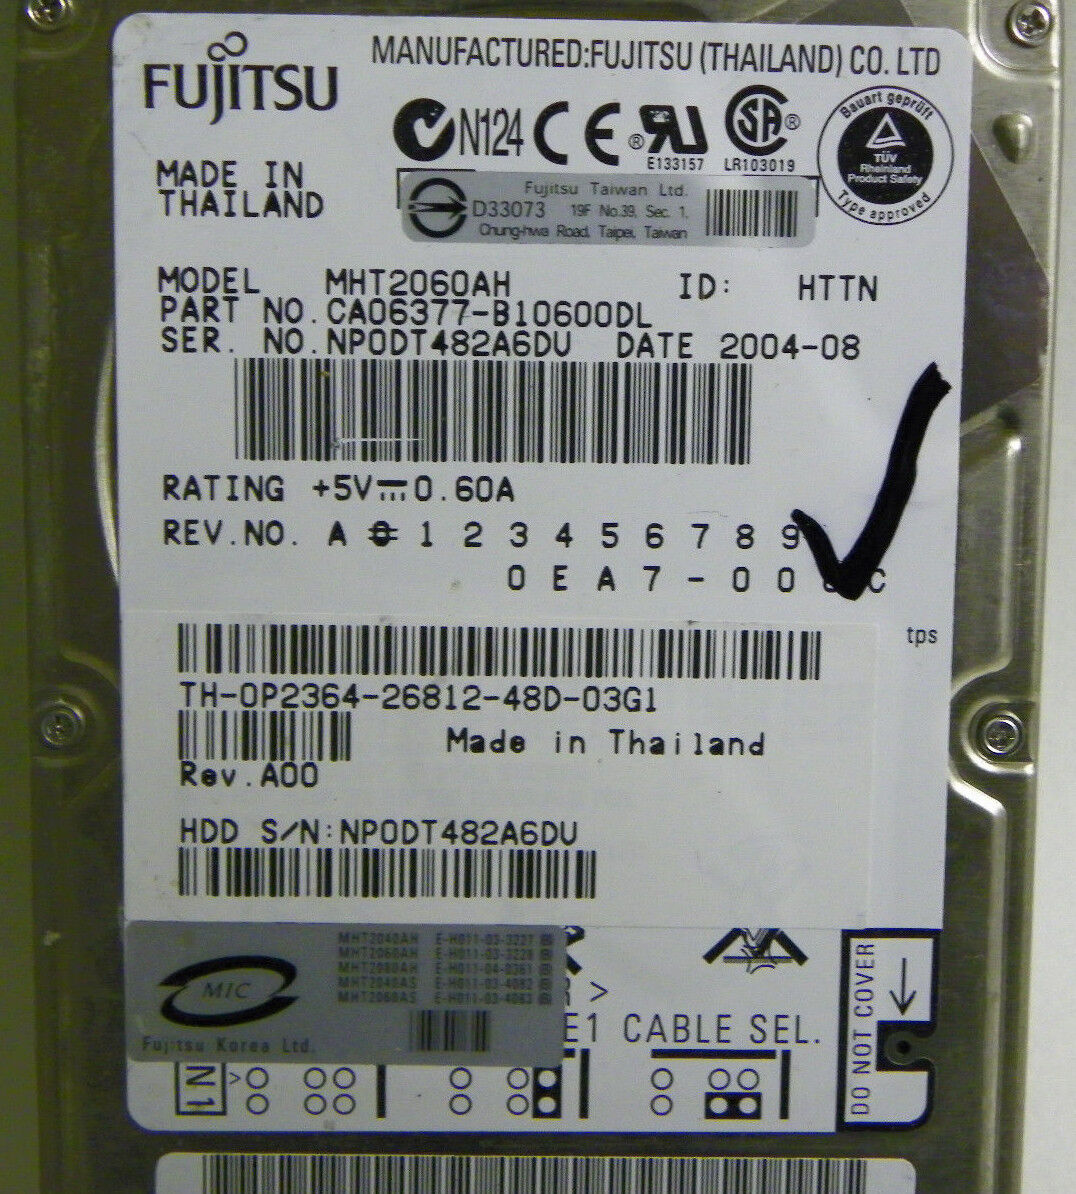 60GB Fujitsu MHT2060AH Laptop IDE Hard Drive P/N CA06377-B10600DL DP/N 0P2364